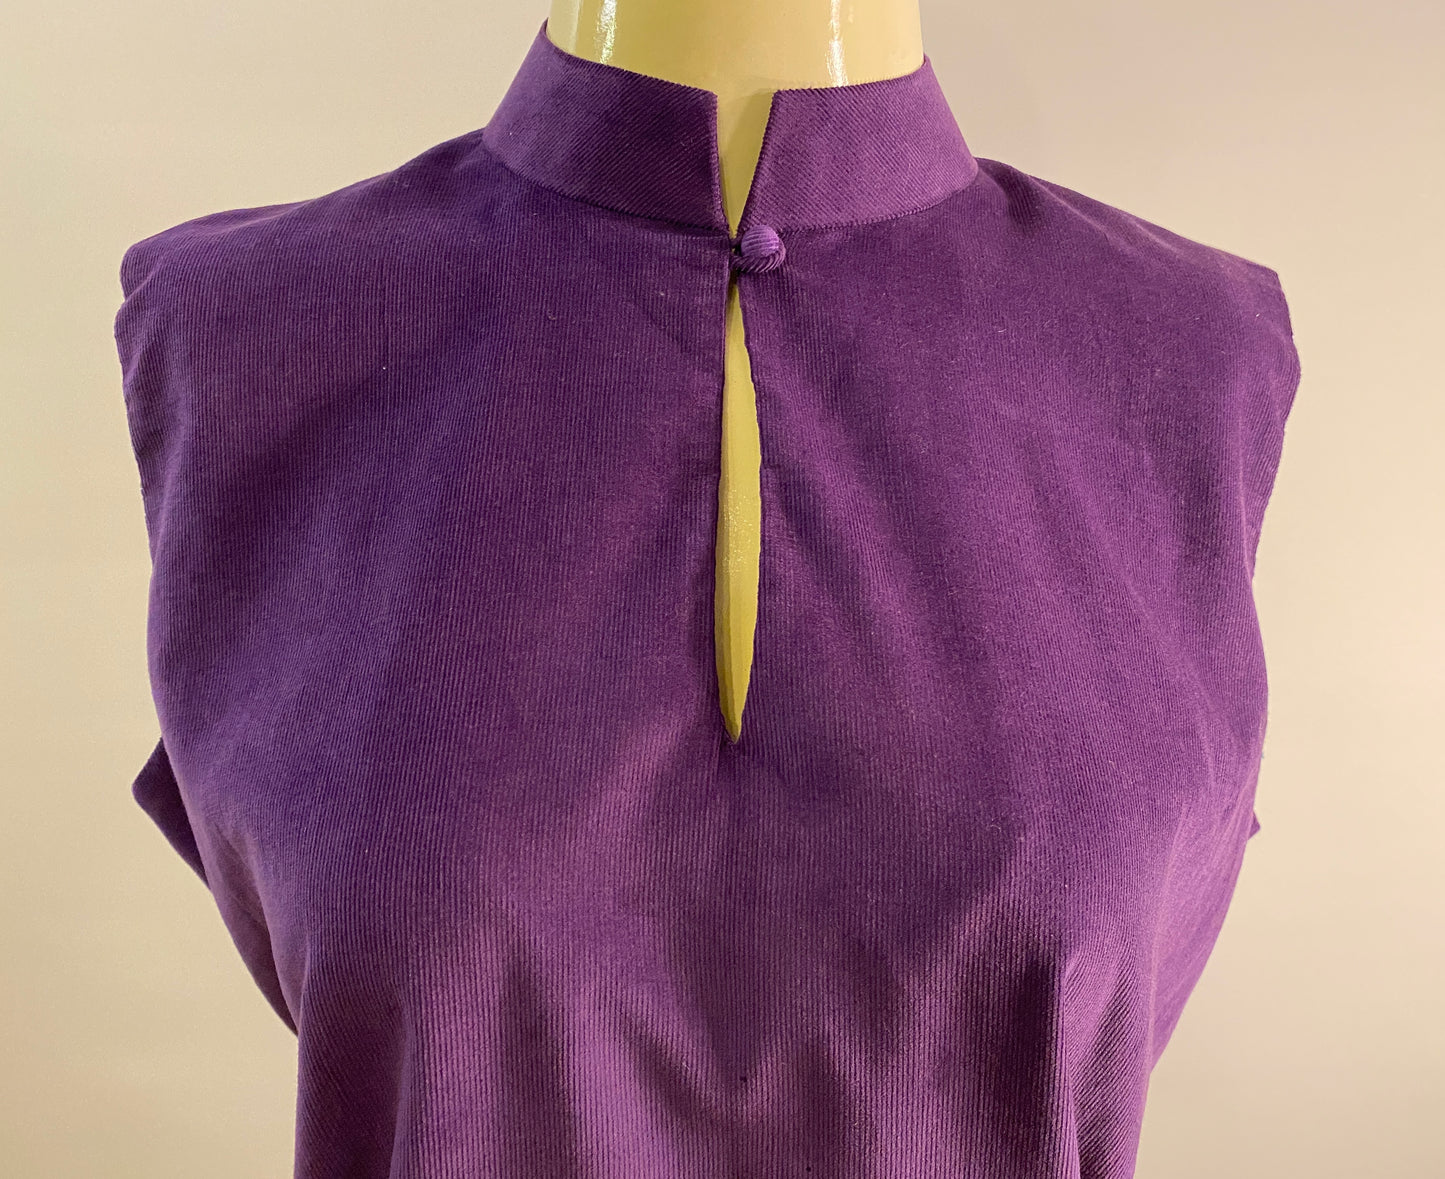 Jasmin Top w Harris Tweed belt and Hand Embroidery - Purple